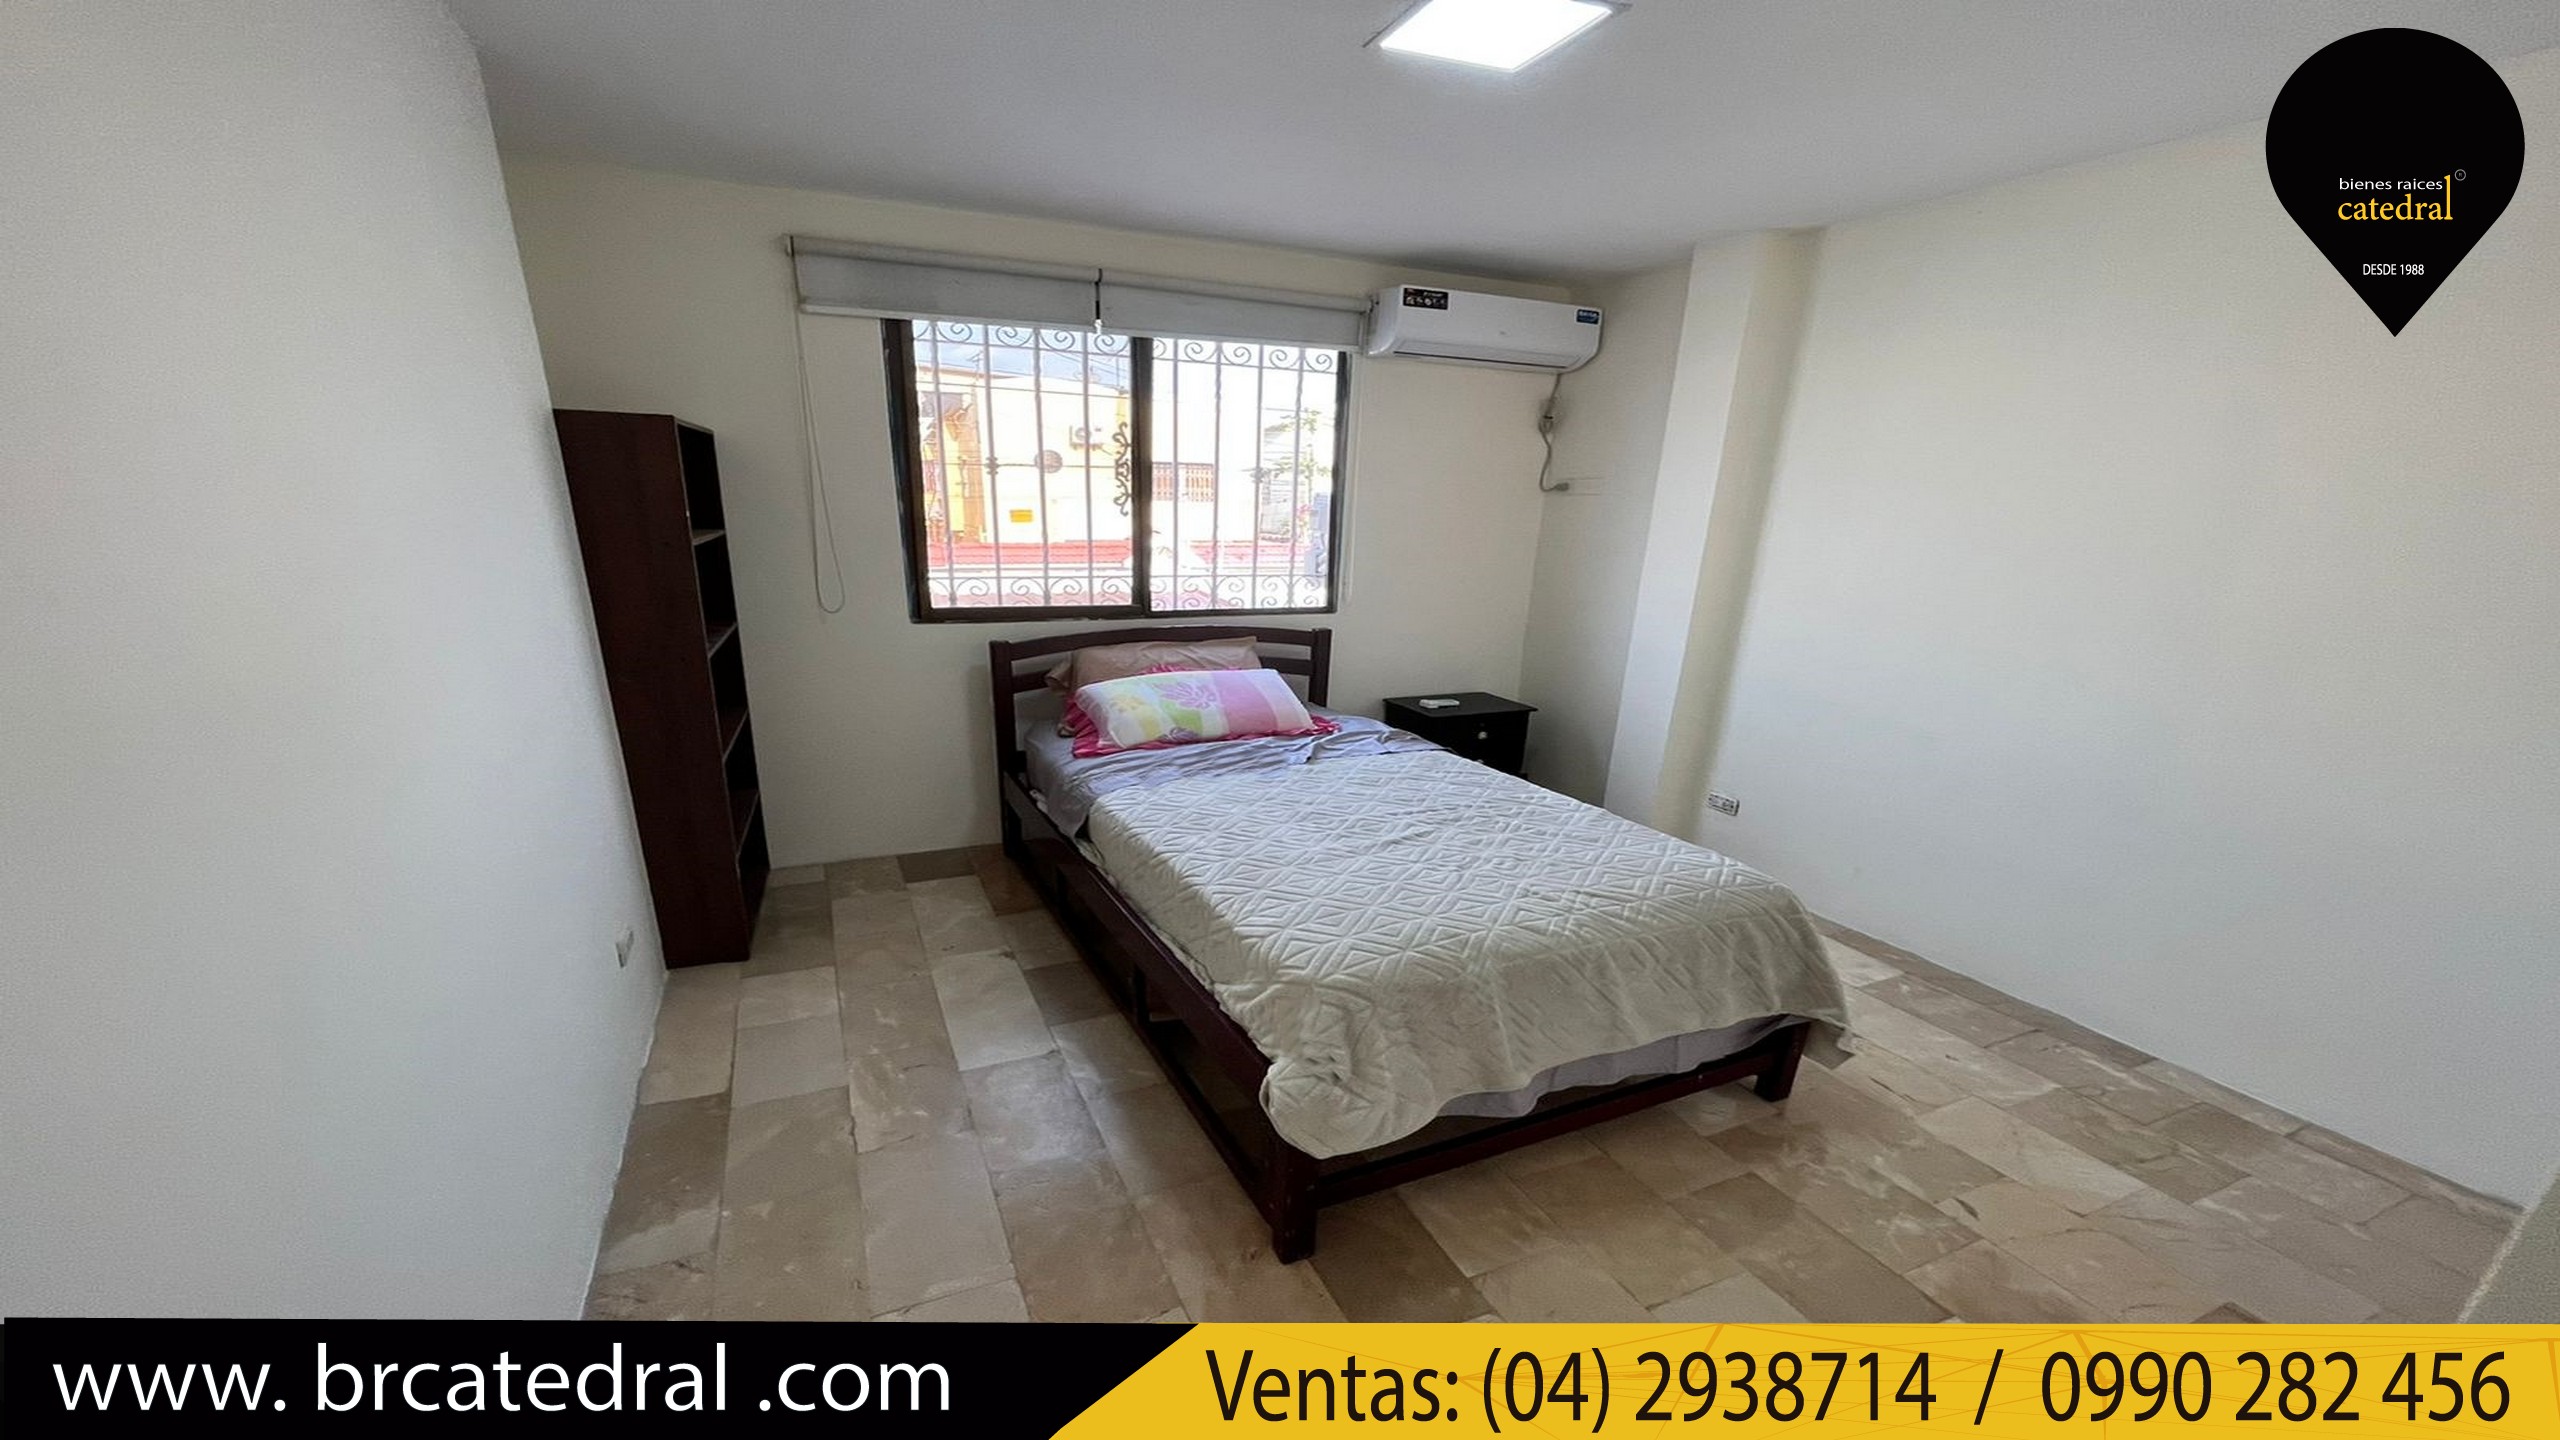 Villa Casa de Venta en Guayaquil Ecuador sector Urb. San Felipe 